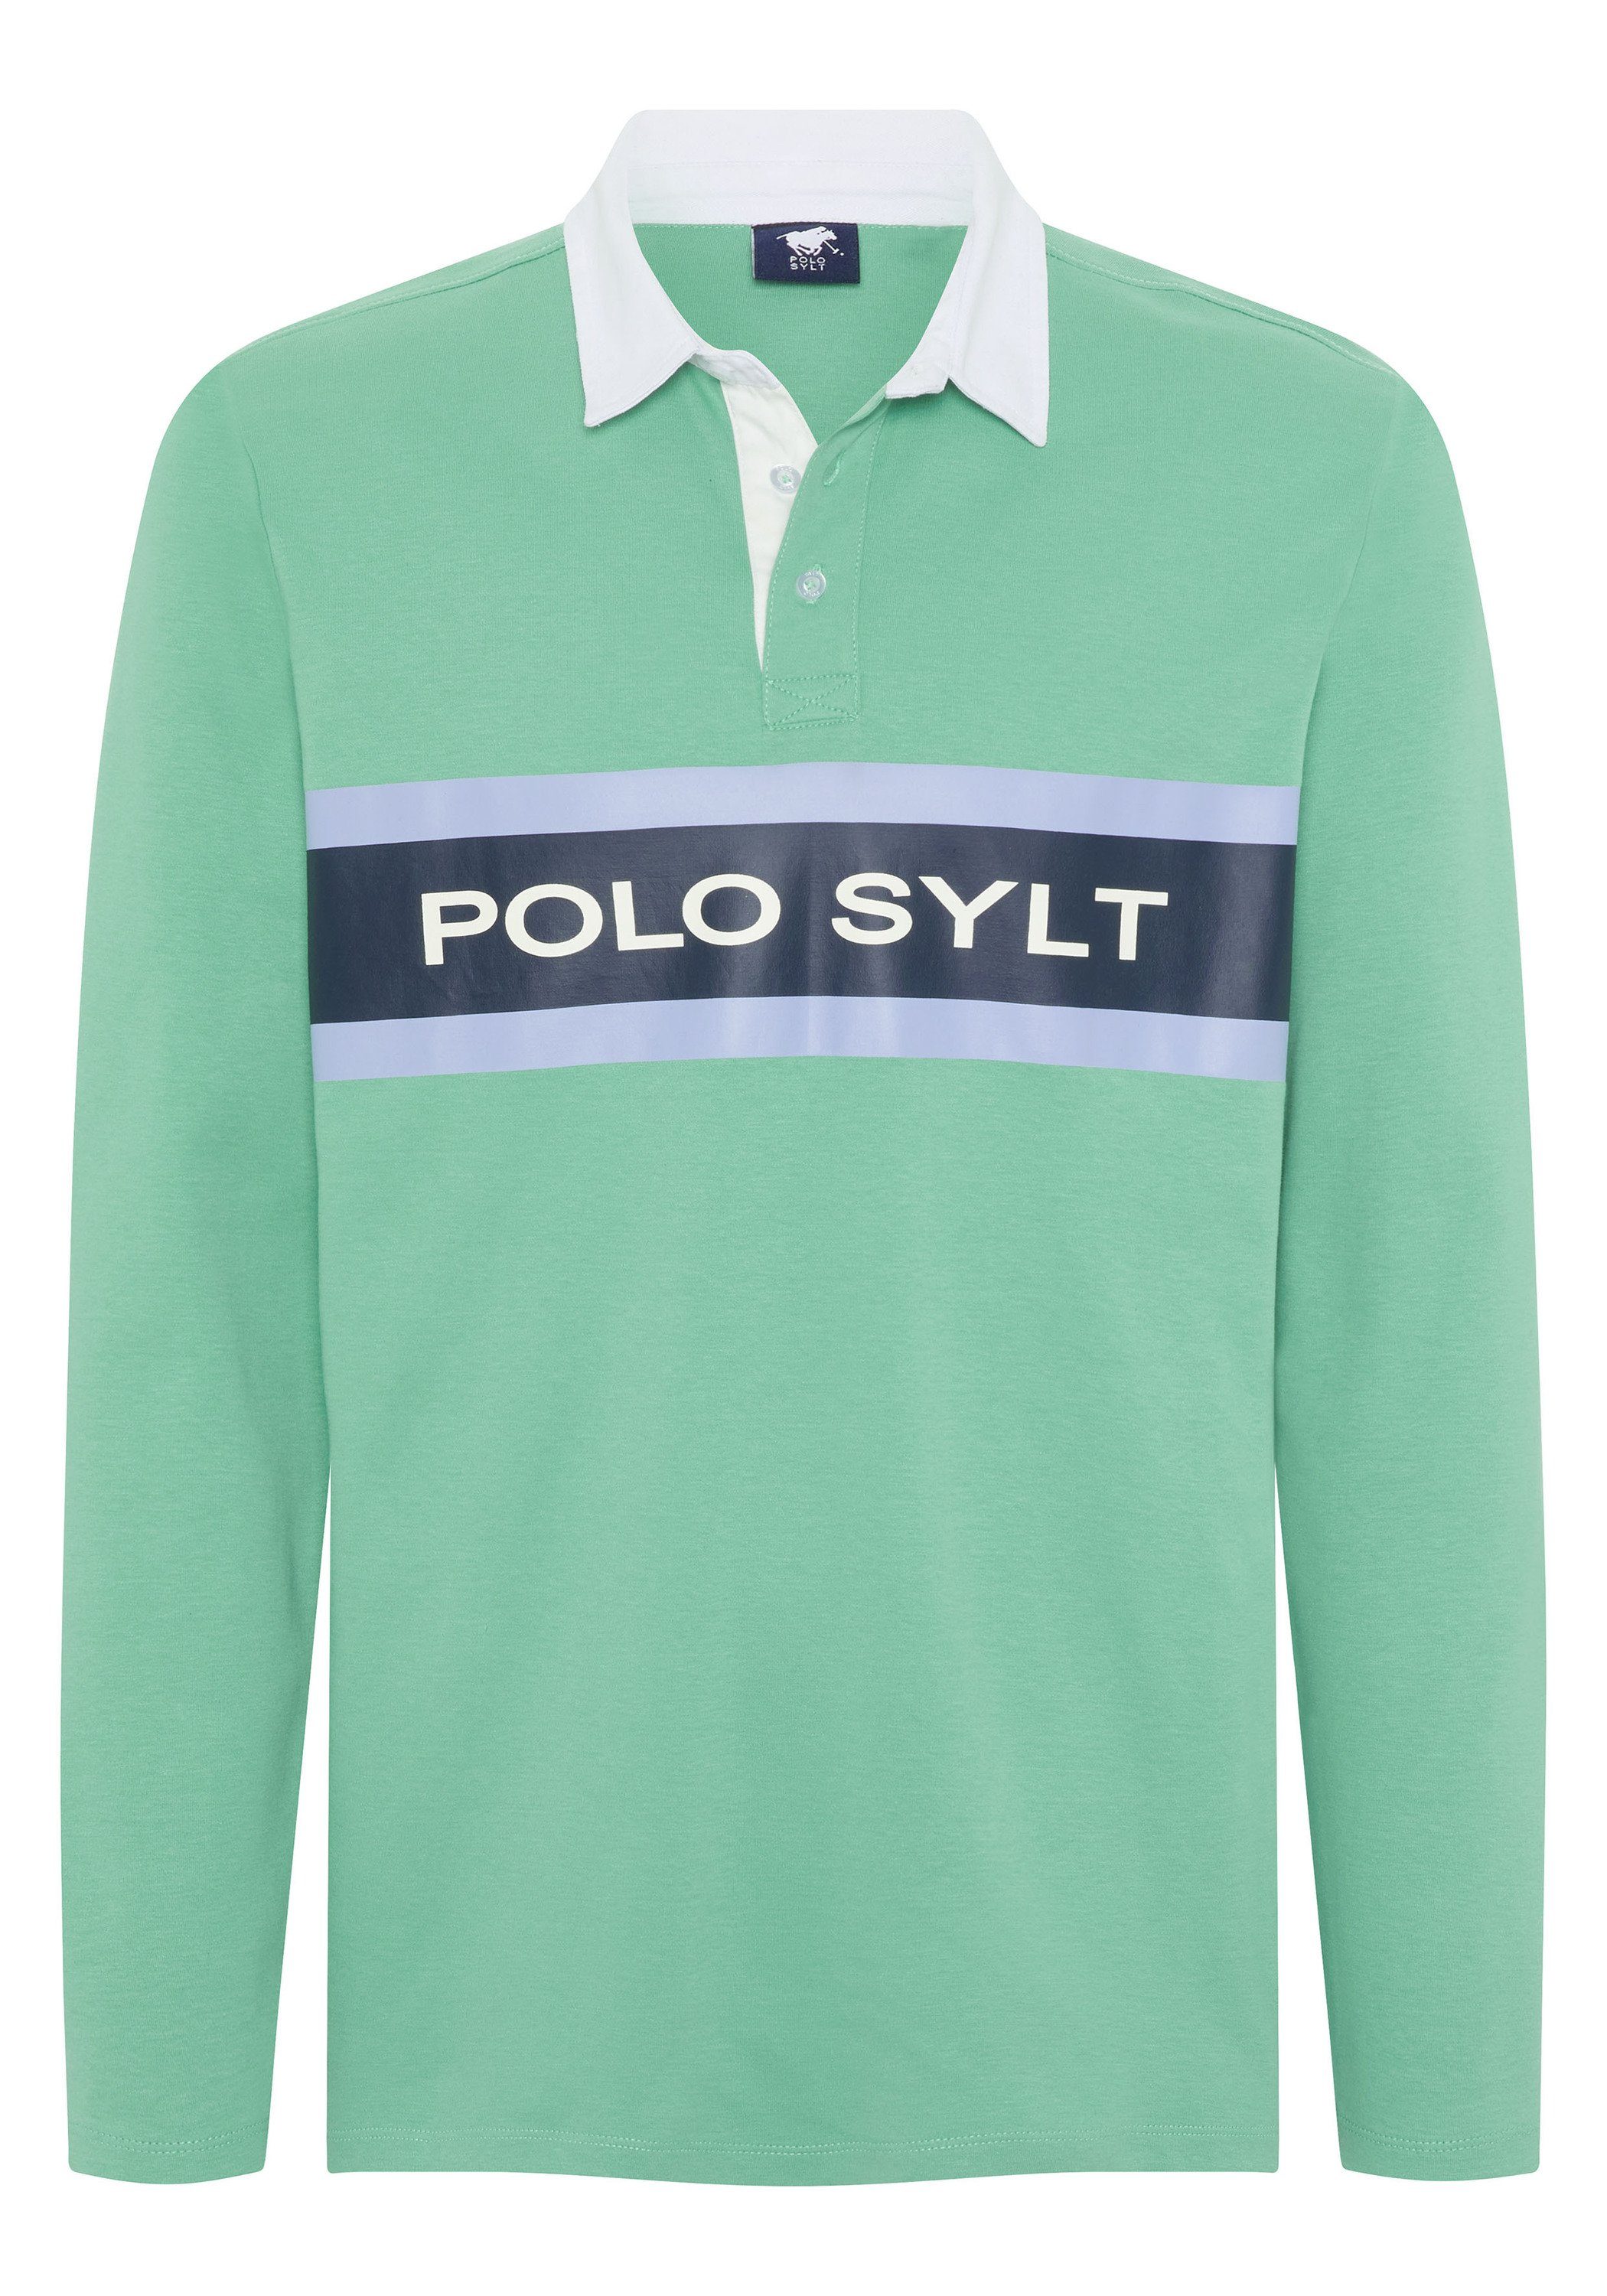 Polo Sylt Poloshirt im Label-Design 16-5721 Marine Green